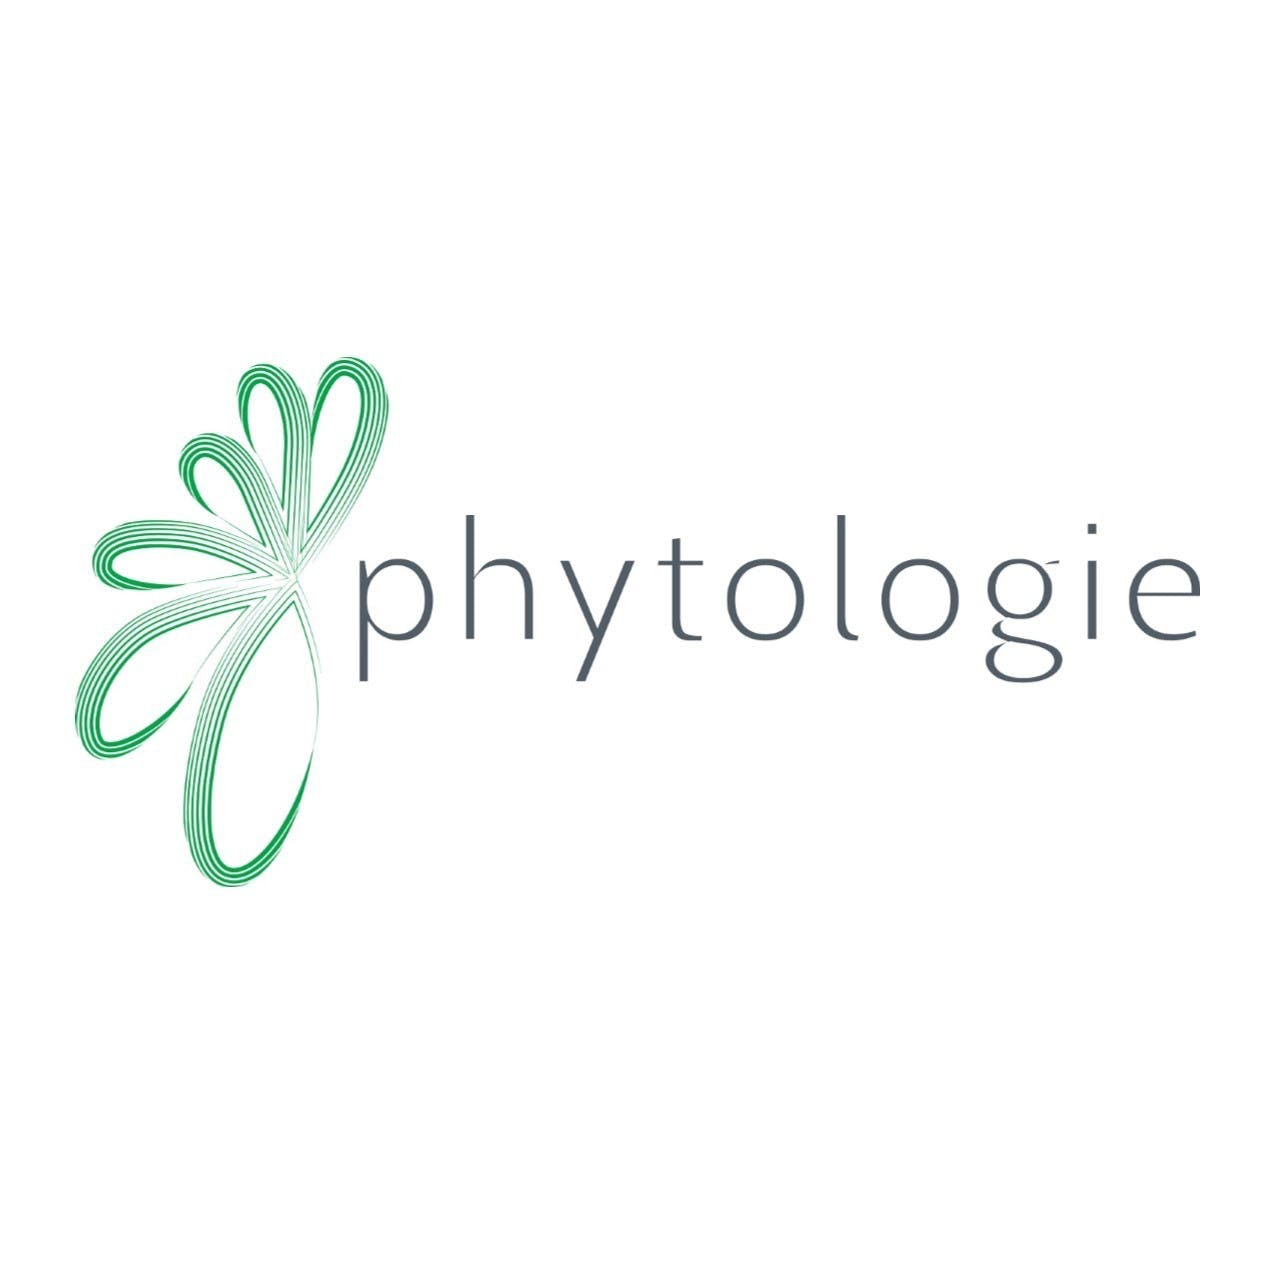 Phytologie Wellness - Medical Marijuana Doctors - Cannabizme.com